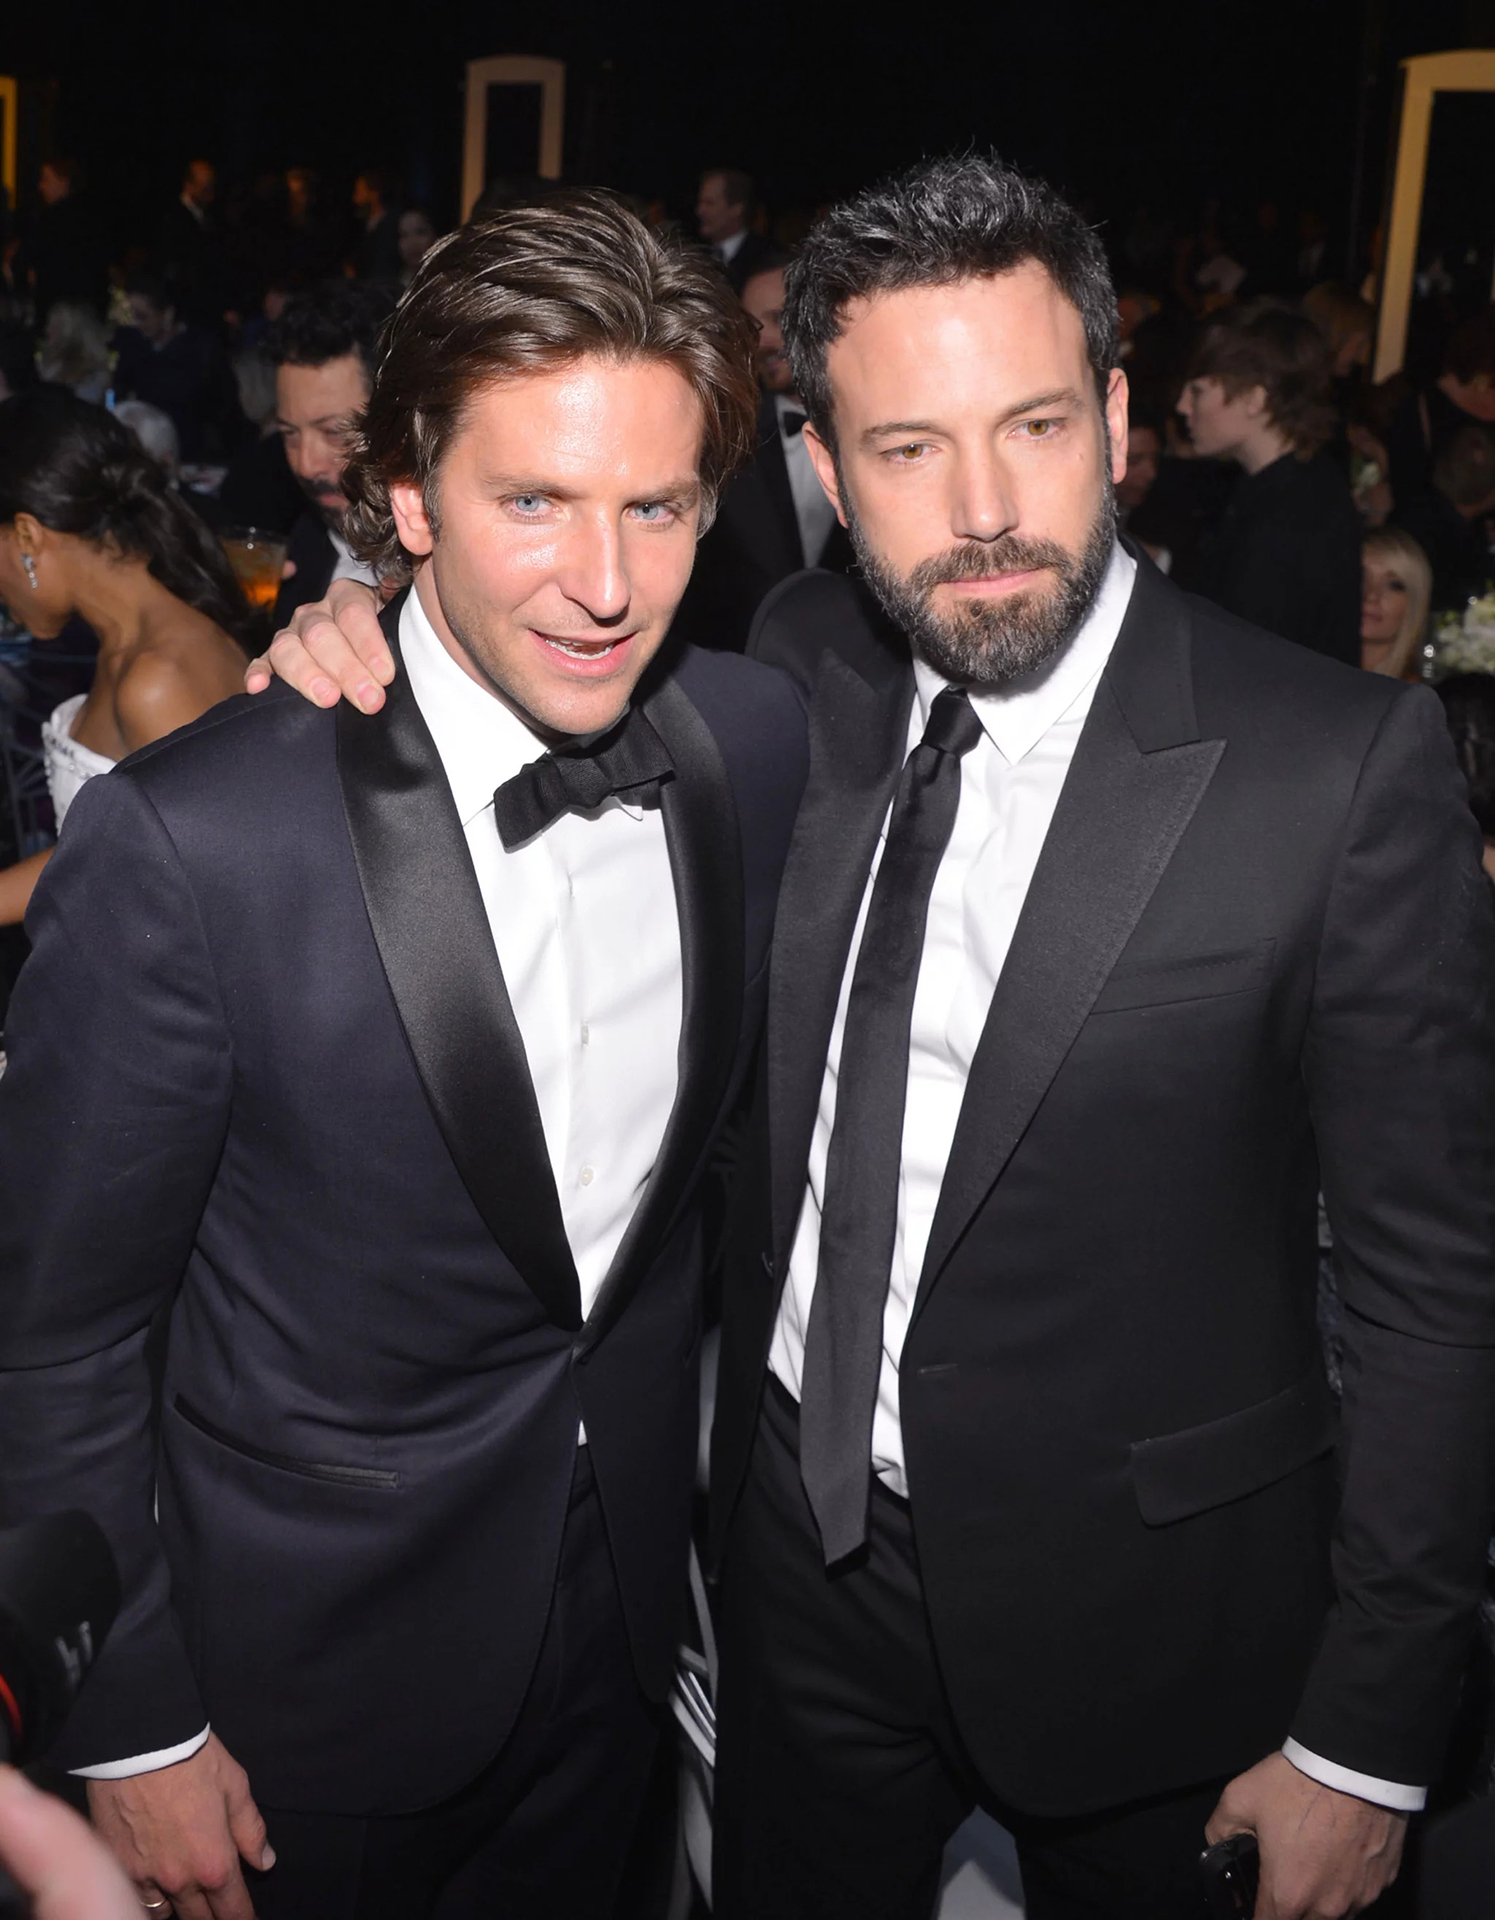 Bradley Cooper and Ben Affleck wearing black-tie attire